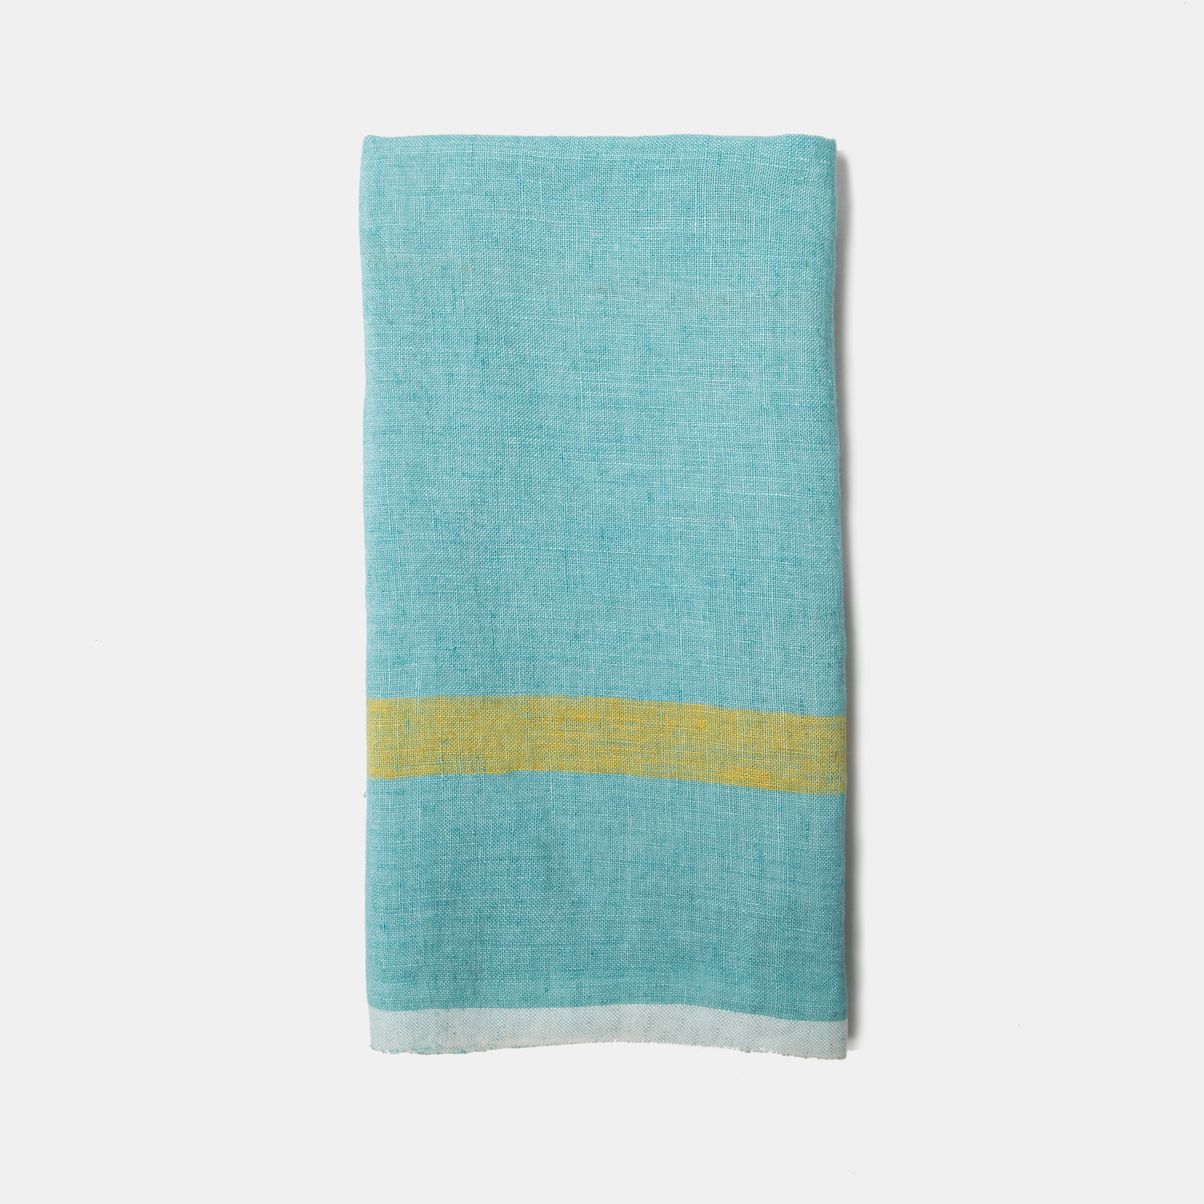 Laundered Linen Kitchen Towels Aqua & Lime, Set of 2